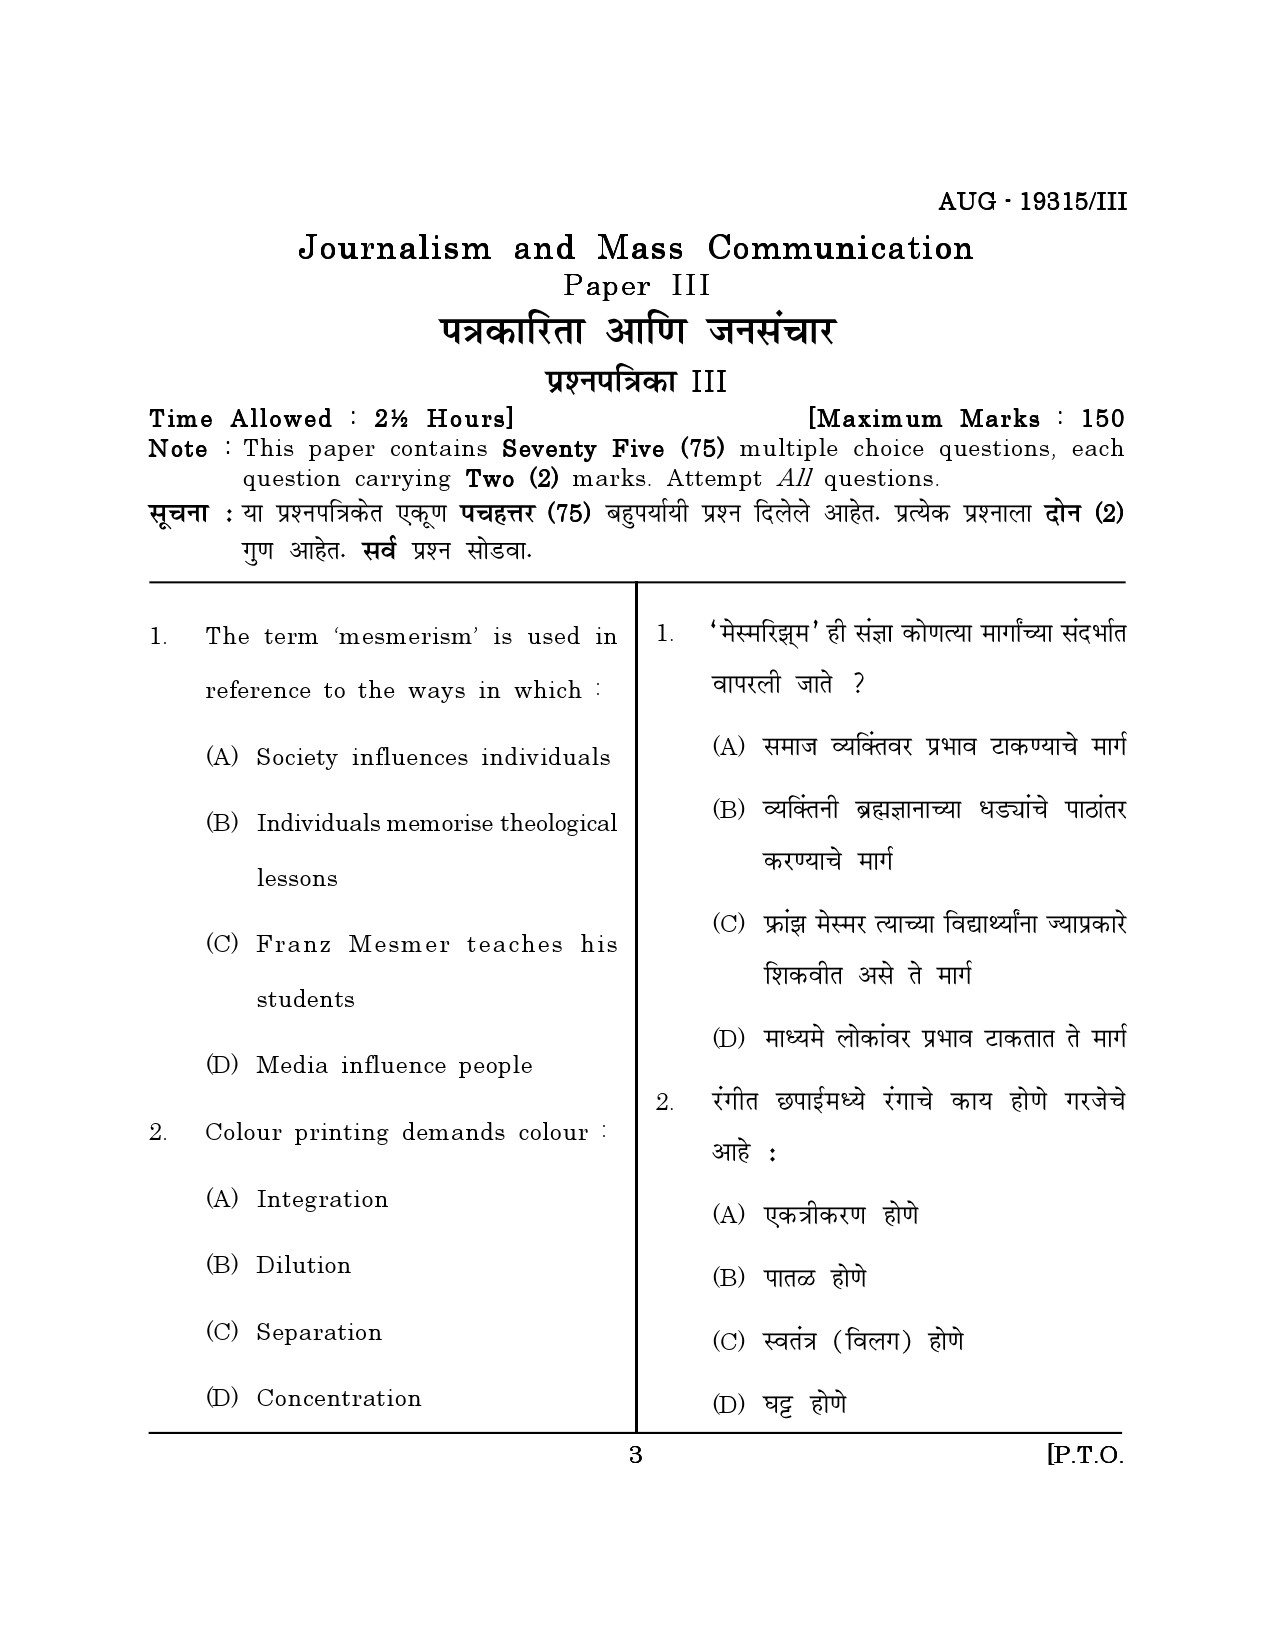 Maharashtra SET Journalism and Mass Communication Question Paper III August 2015 2